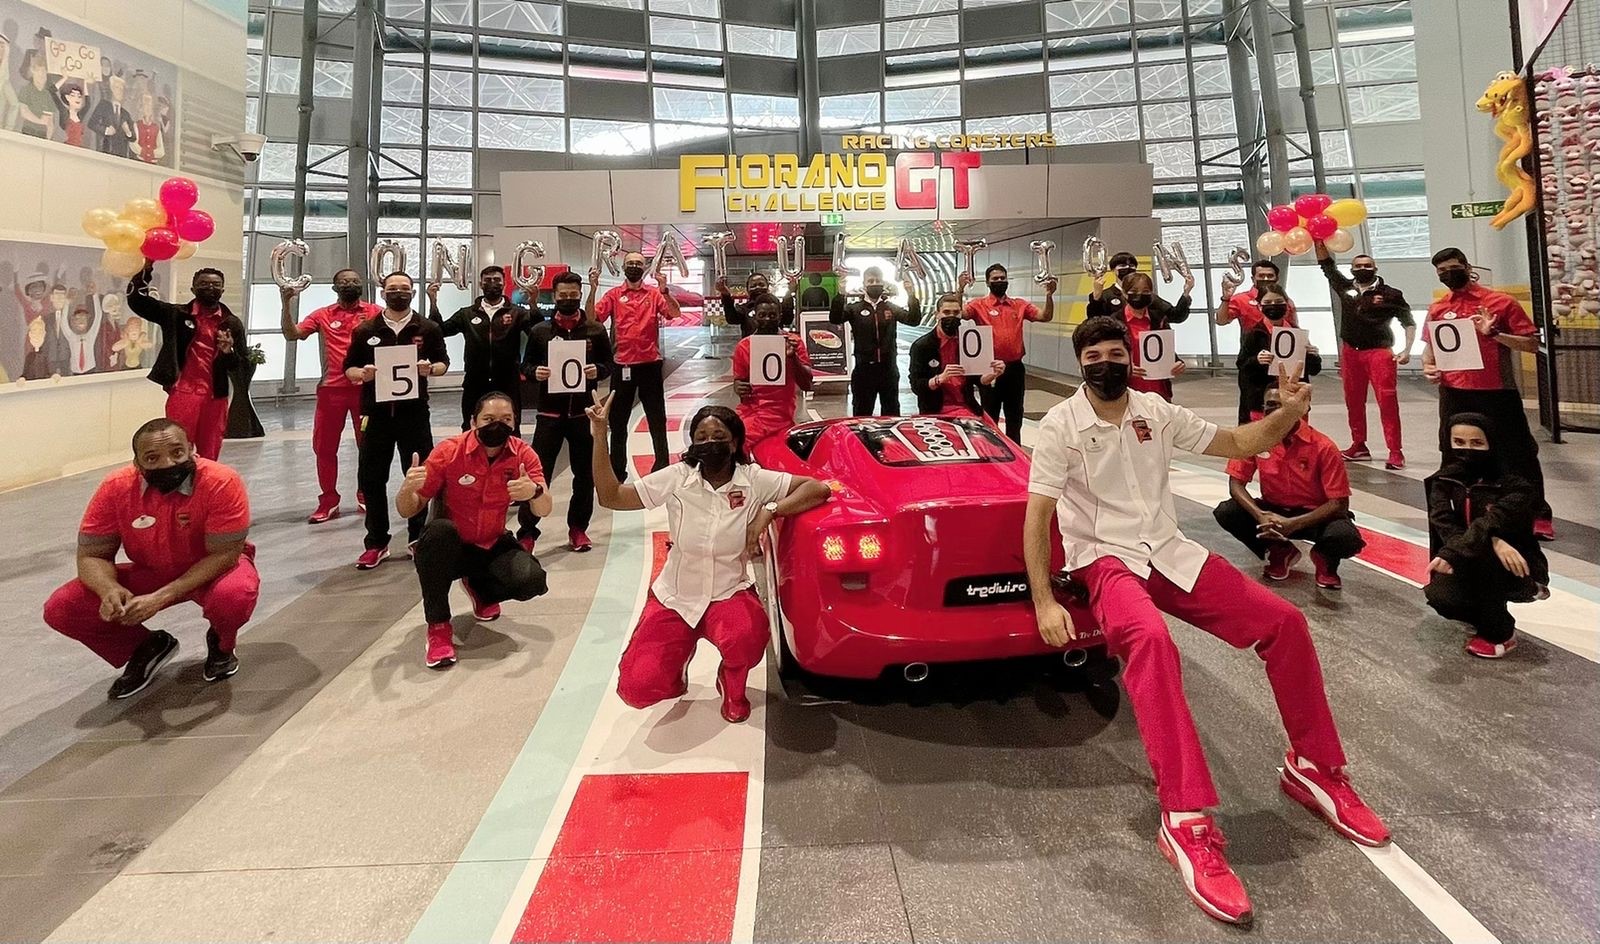 Ferrari World Abu Dhabi Celebrates 5 Millionriders On Fiorano GT Challenge